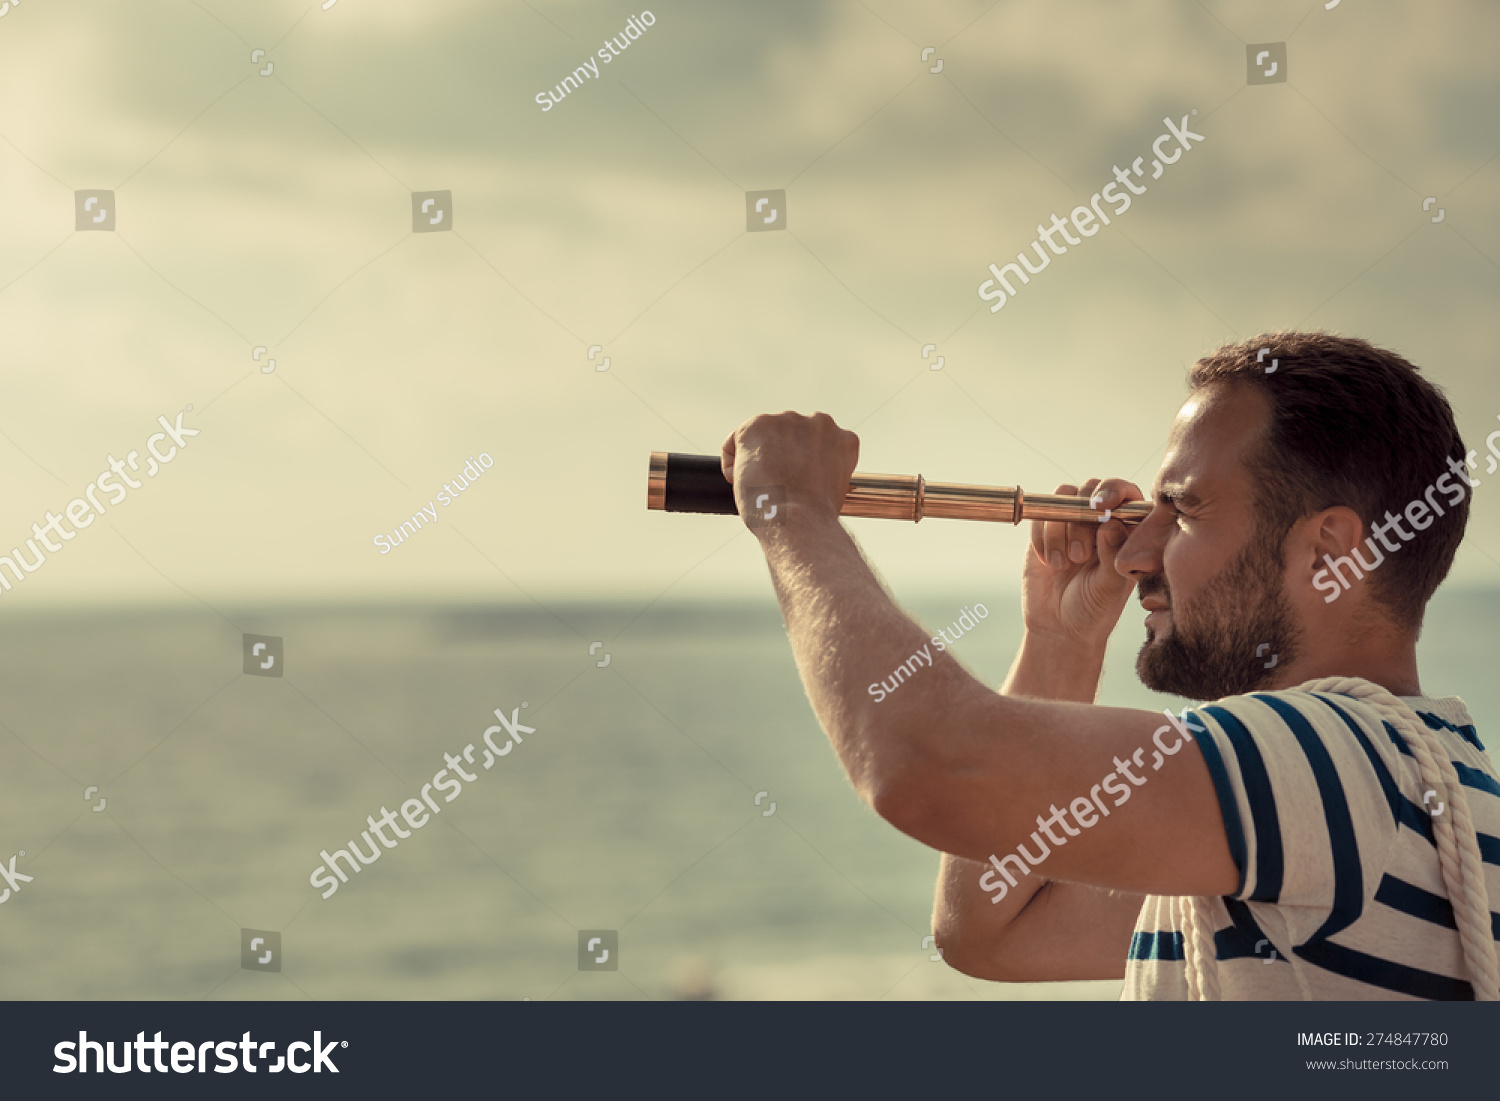 Sailor man looking through the binoculars against blue sky background #274847780